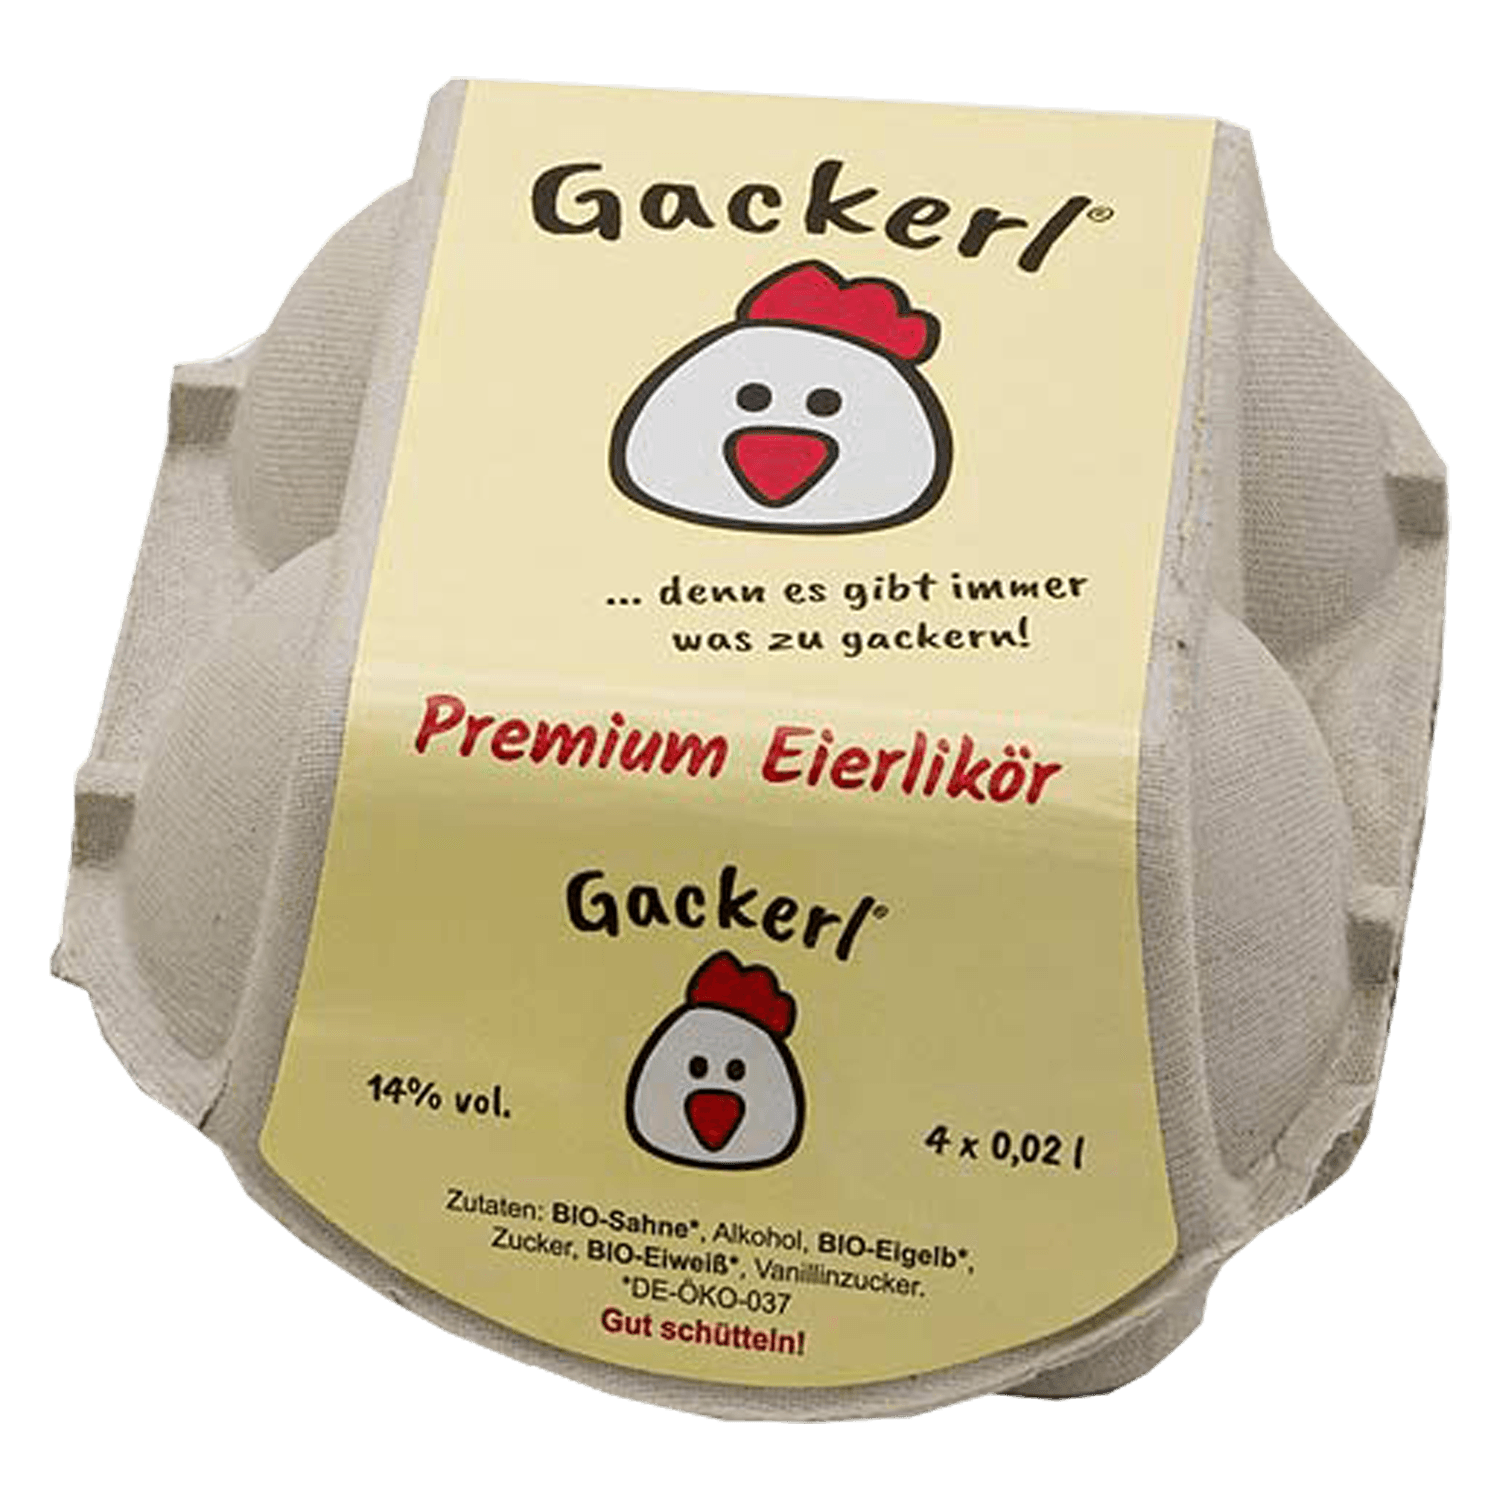 Gackerl - Premium BIO Eierlikör im Glas - bavariashop - mei LebensGfui